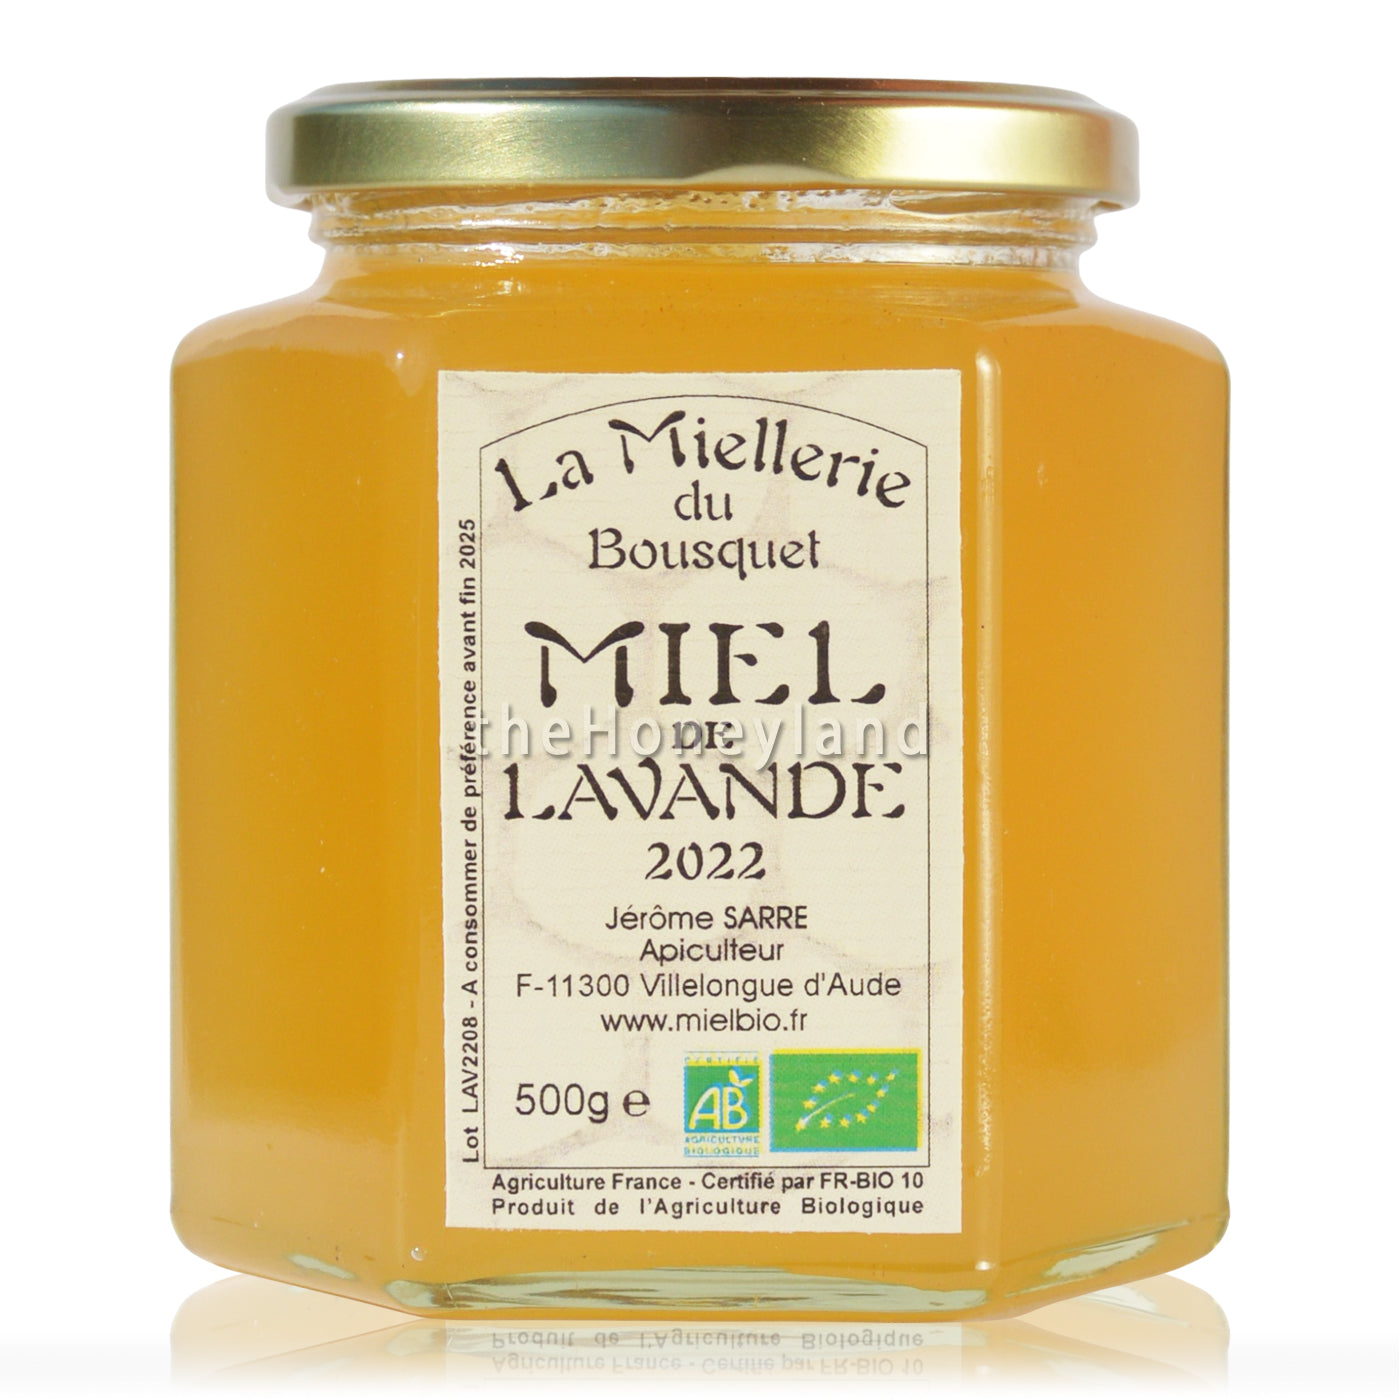 Organic lavender honey from the Alpes de Haute Provence